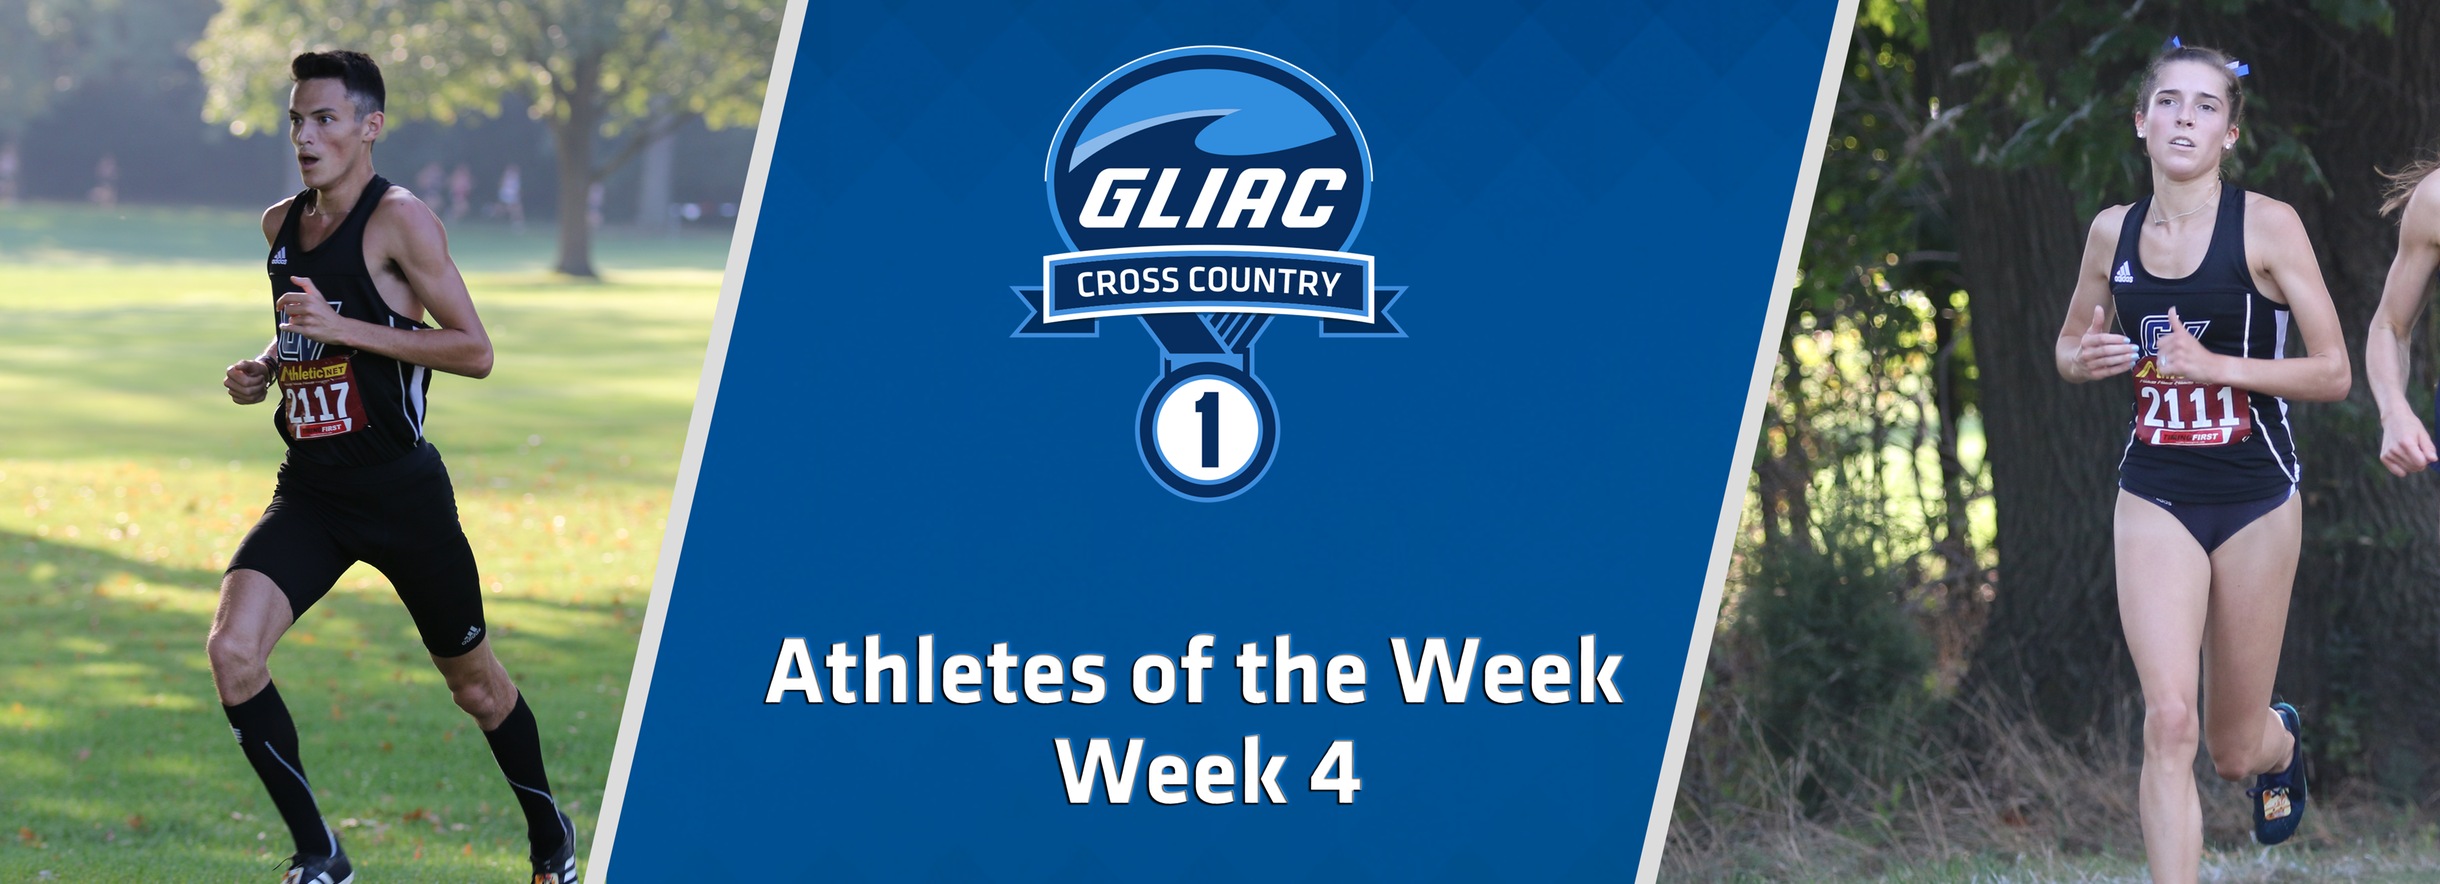 GVSU's Chada and Ludge Earn GLIAC Cross Country Athlete of the Week Accolades